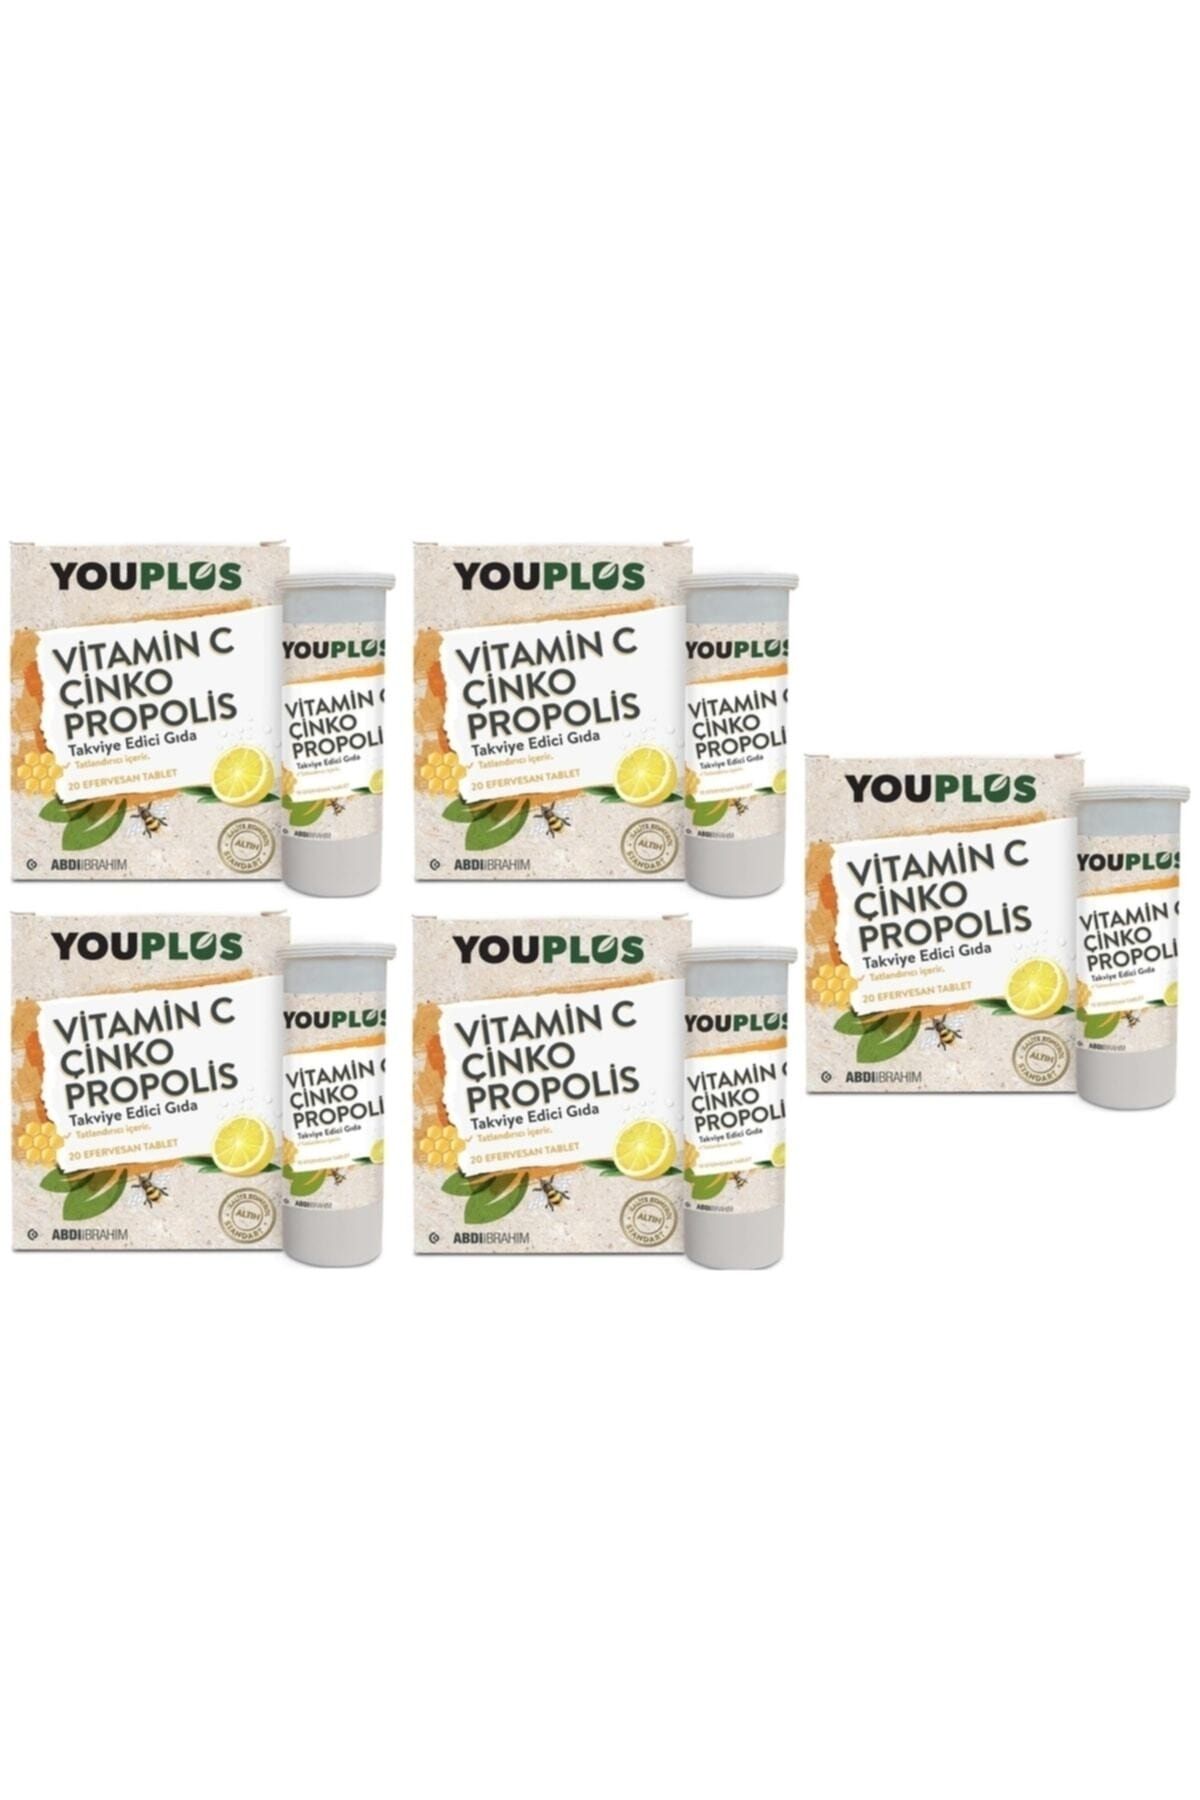 ABDİİBRAHİM Youplus Vitamin C Çinko Propolis 20 Efervesan Tablet 5 Adet